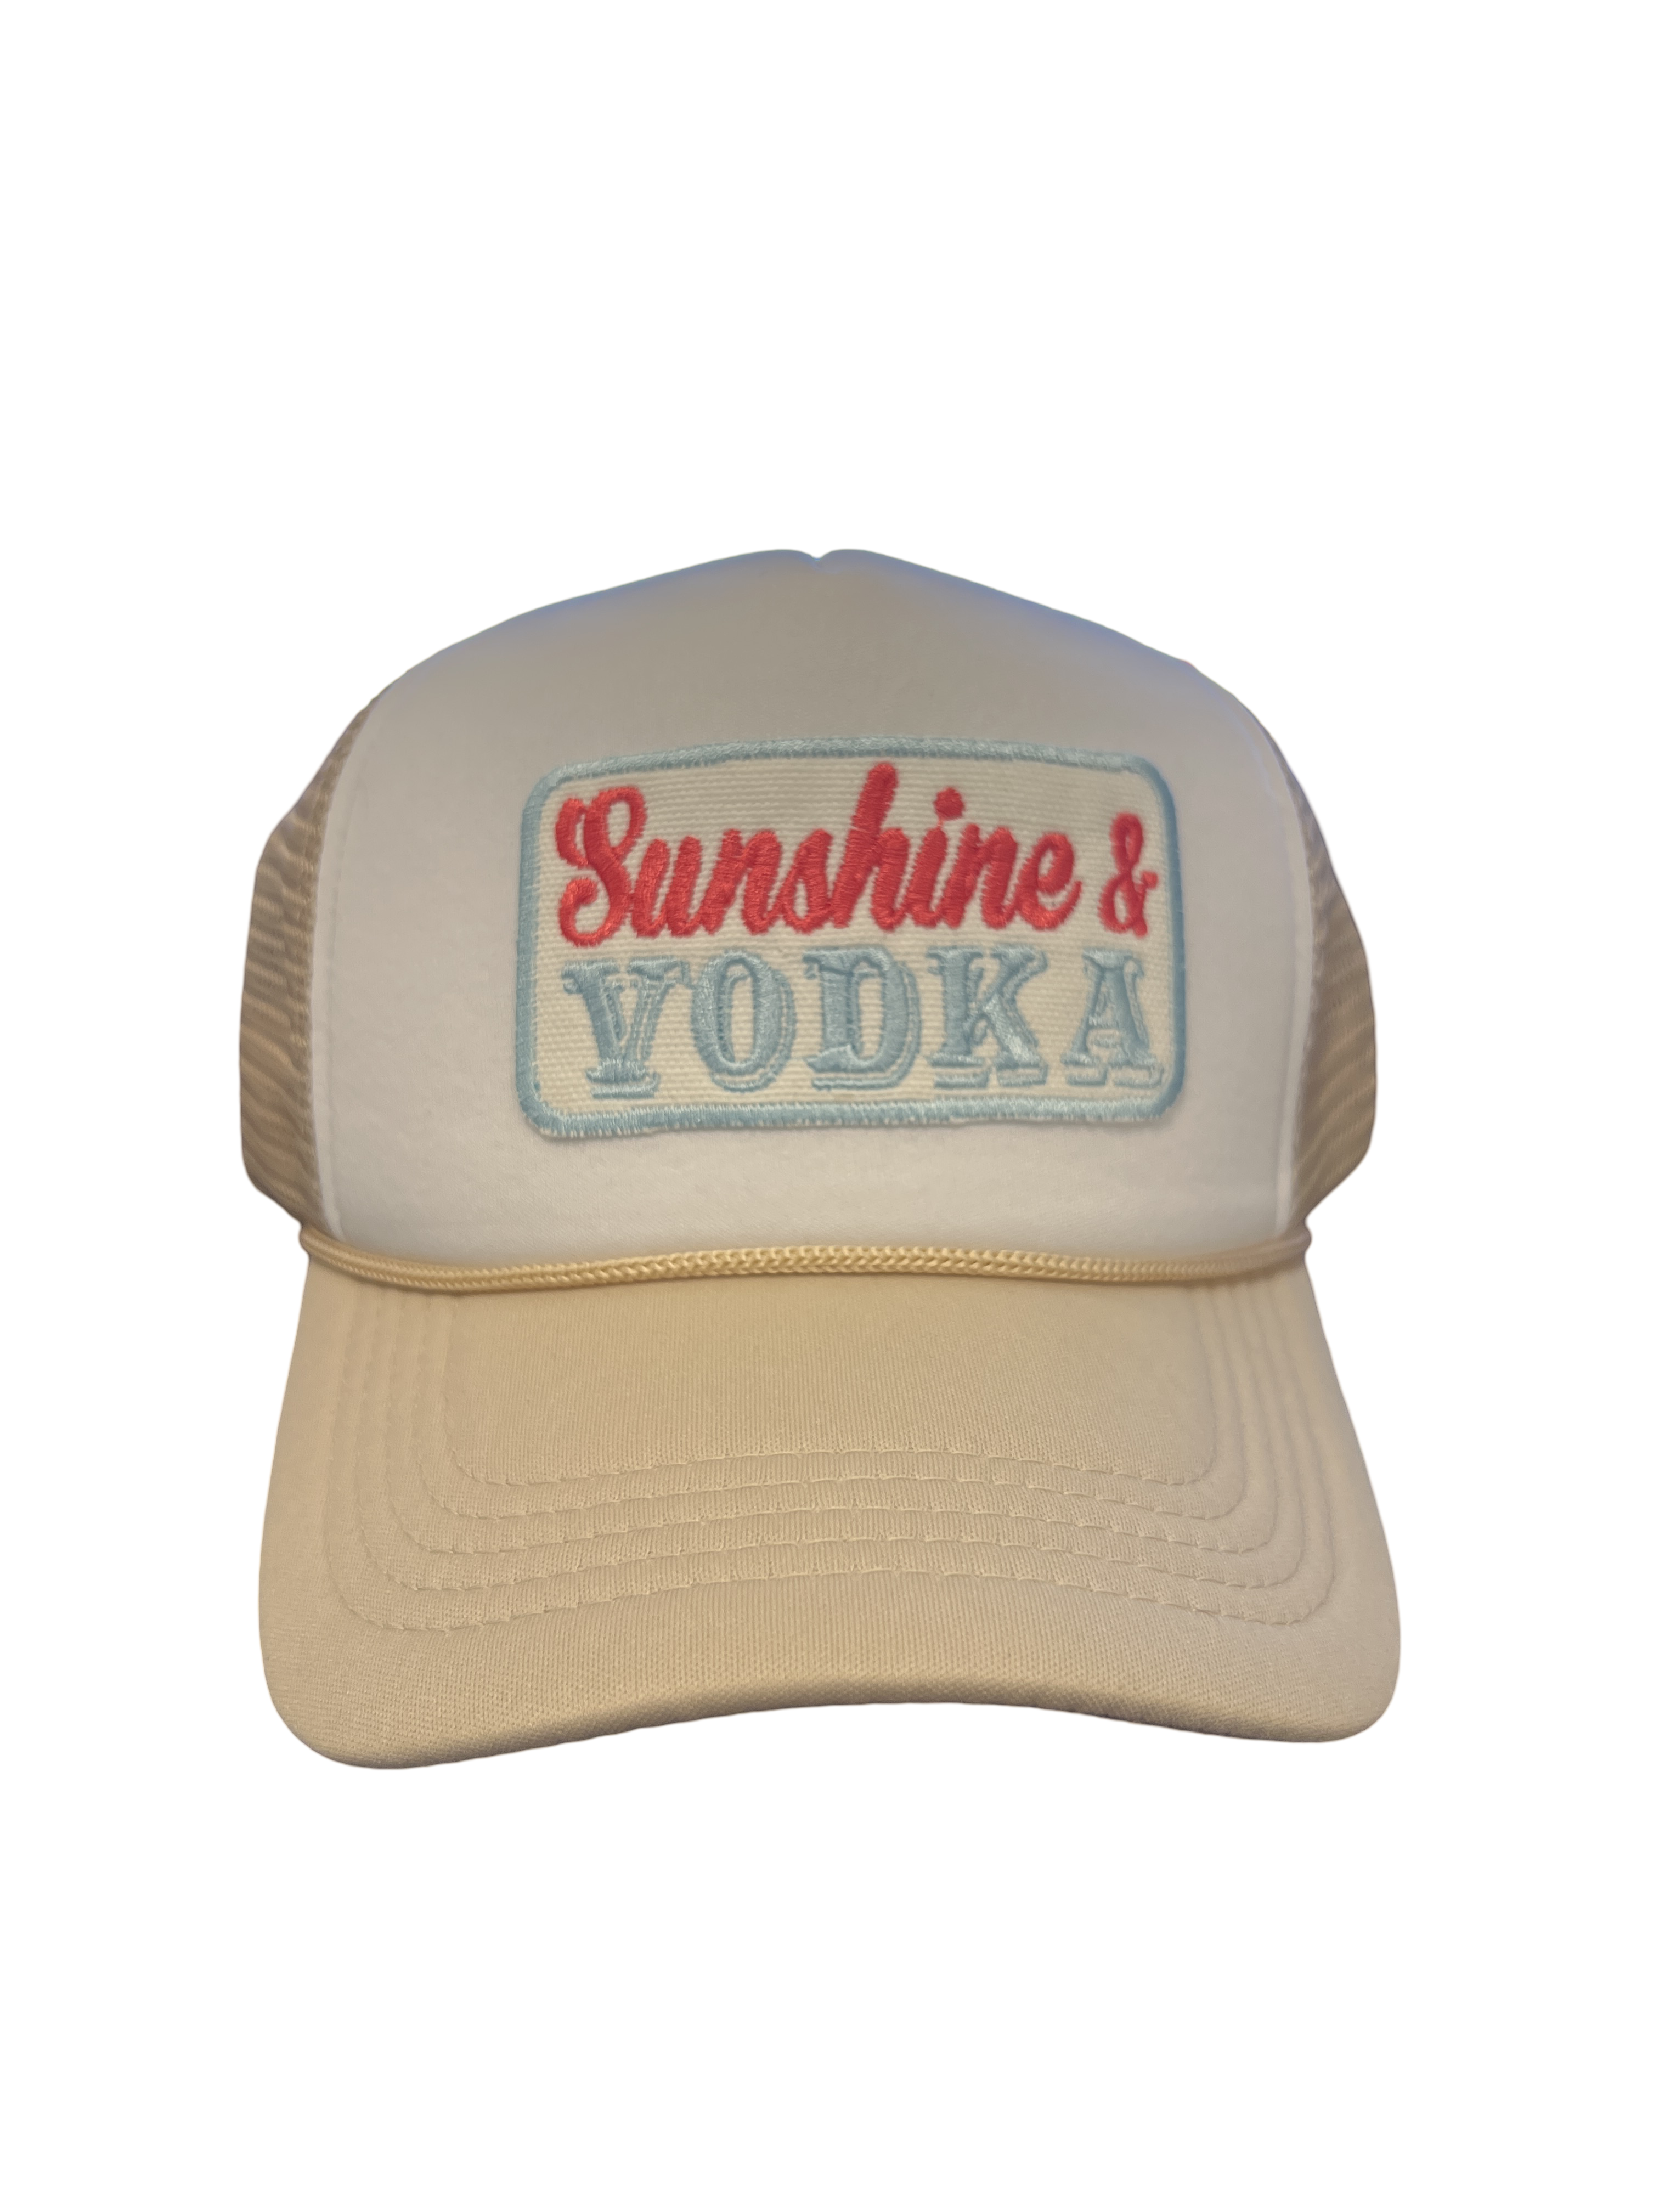 Trucker Hat Foam "Sunshine & Vodka"